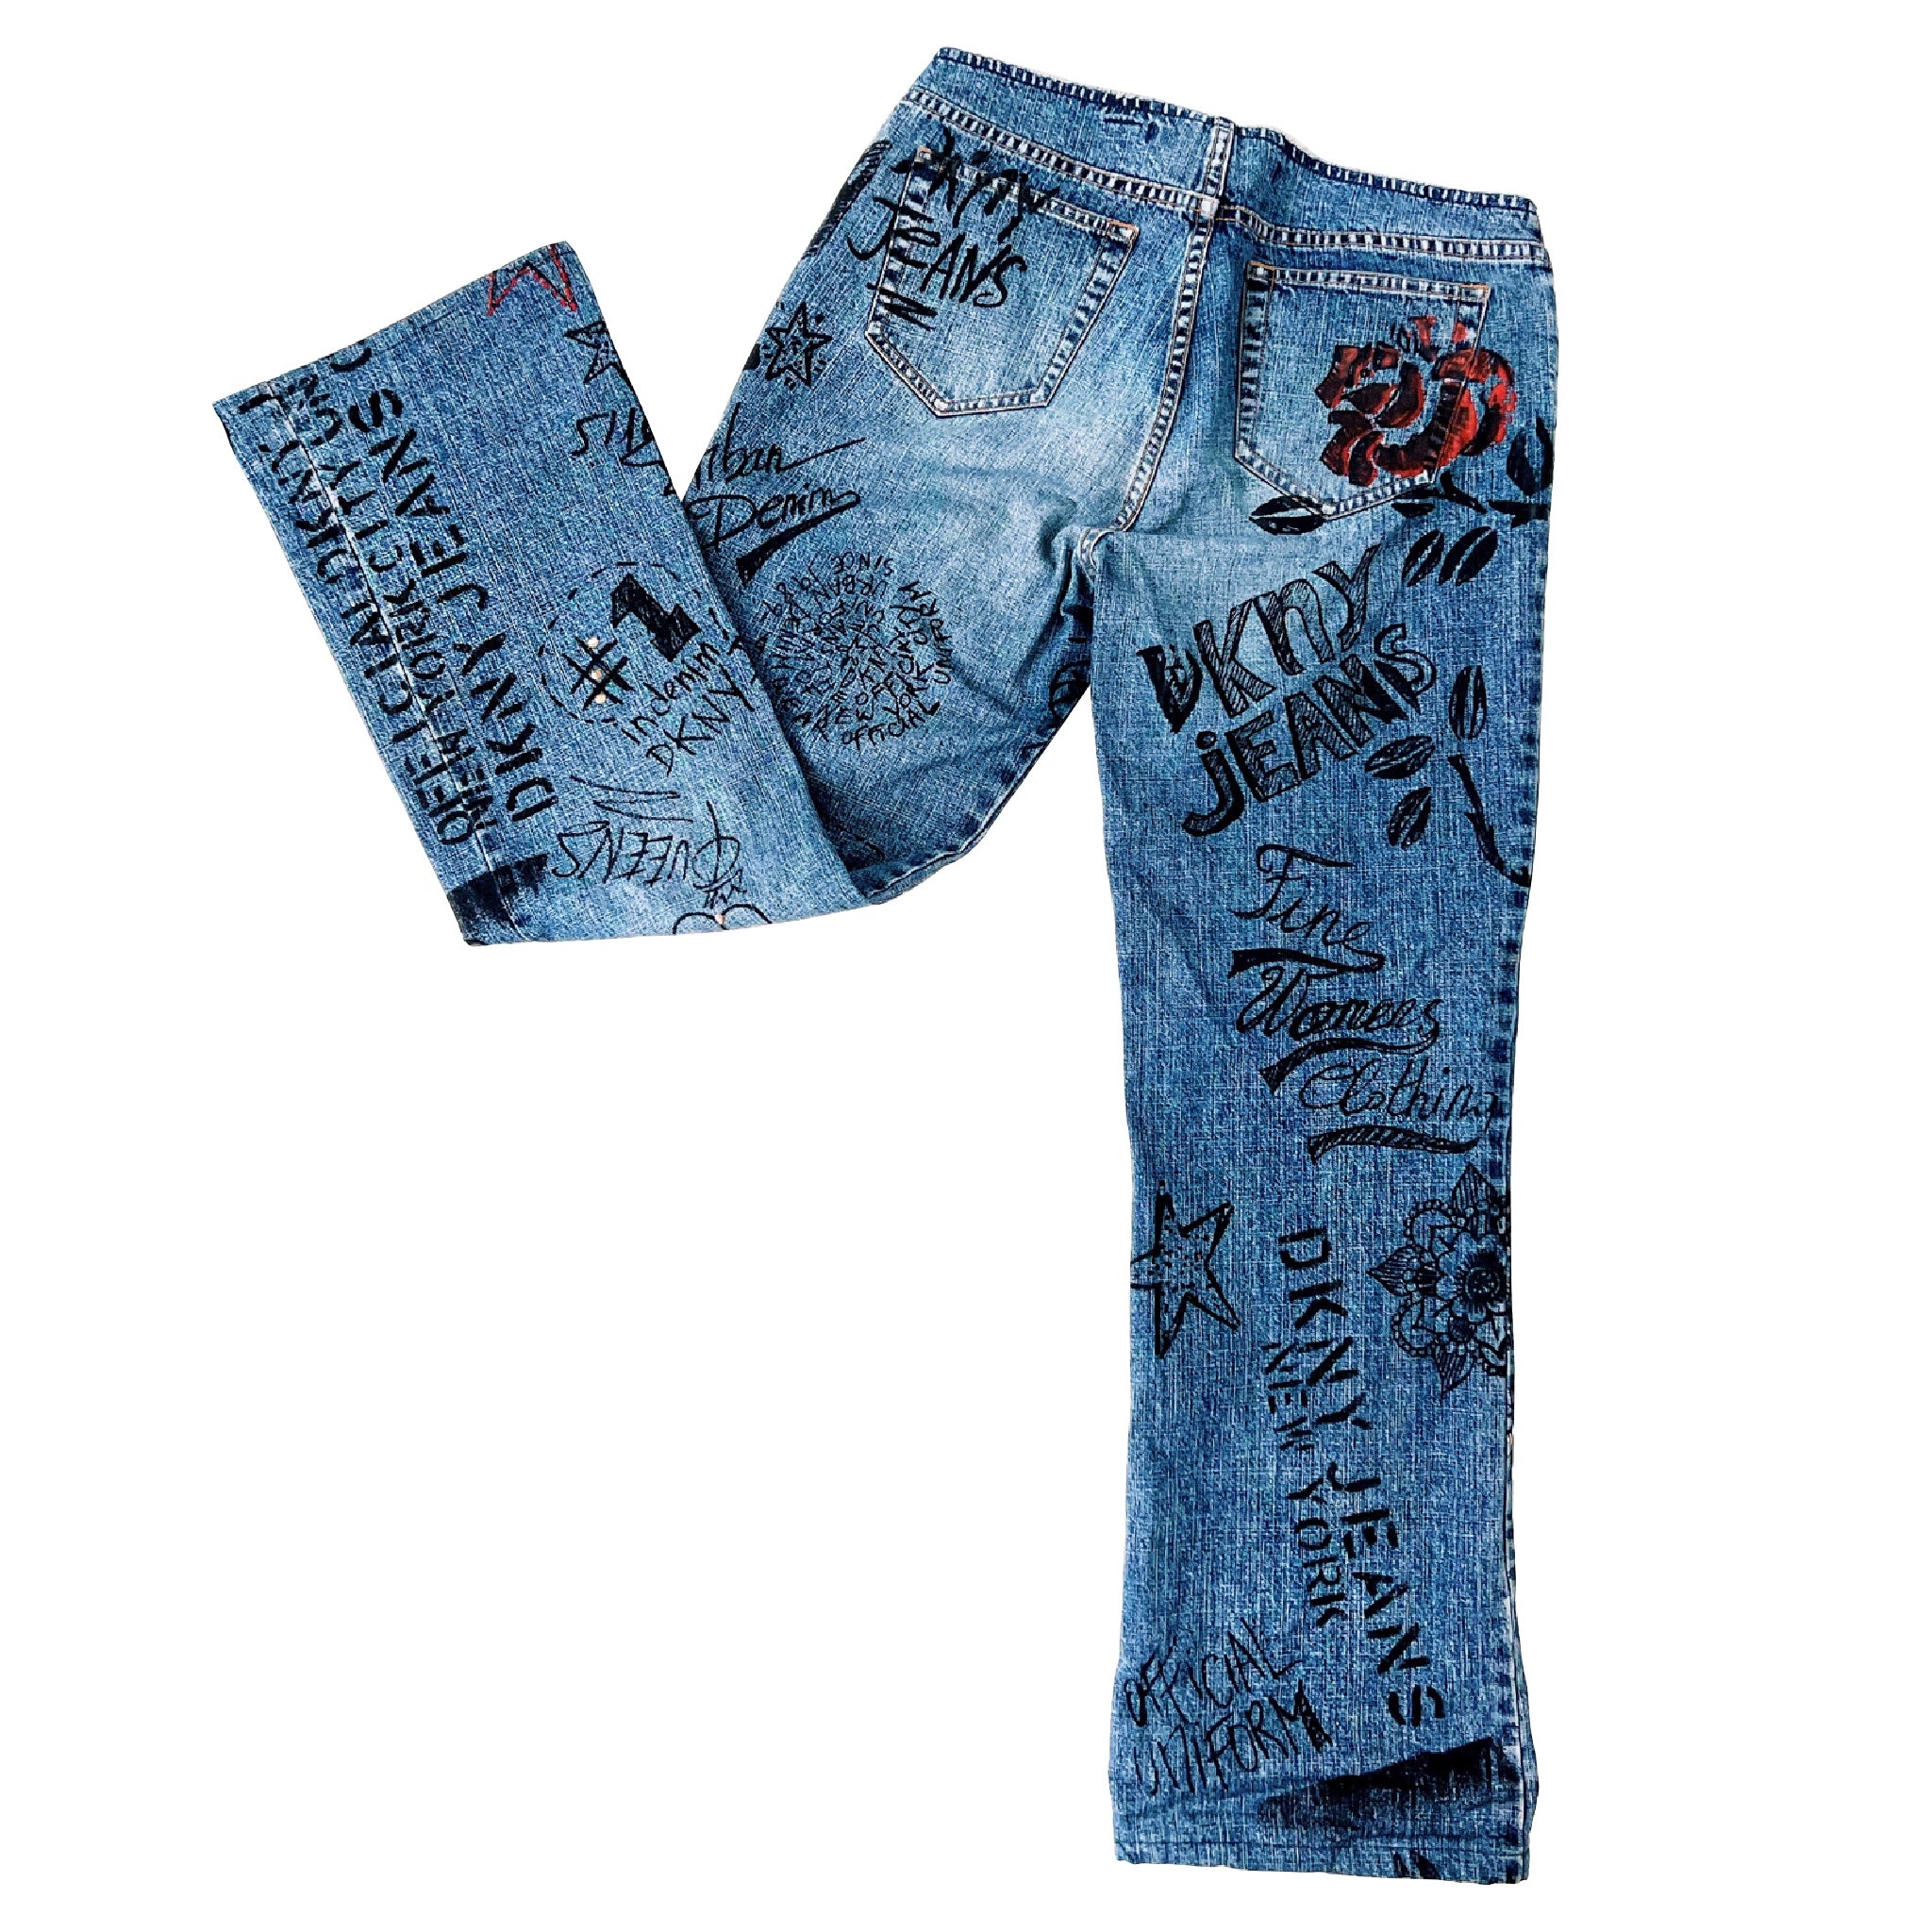 DKNY Graffiti Jeans (S)